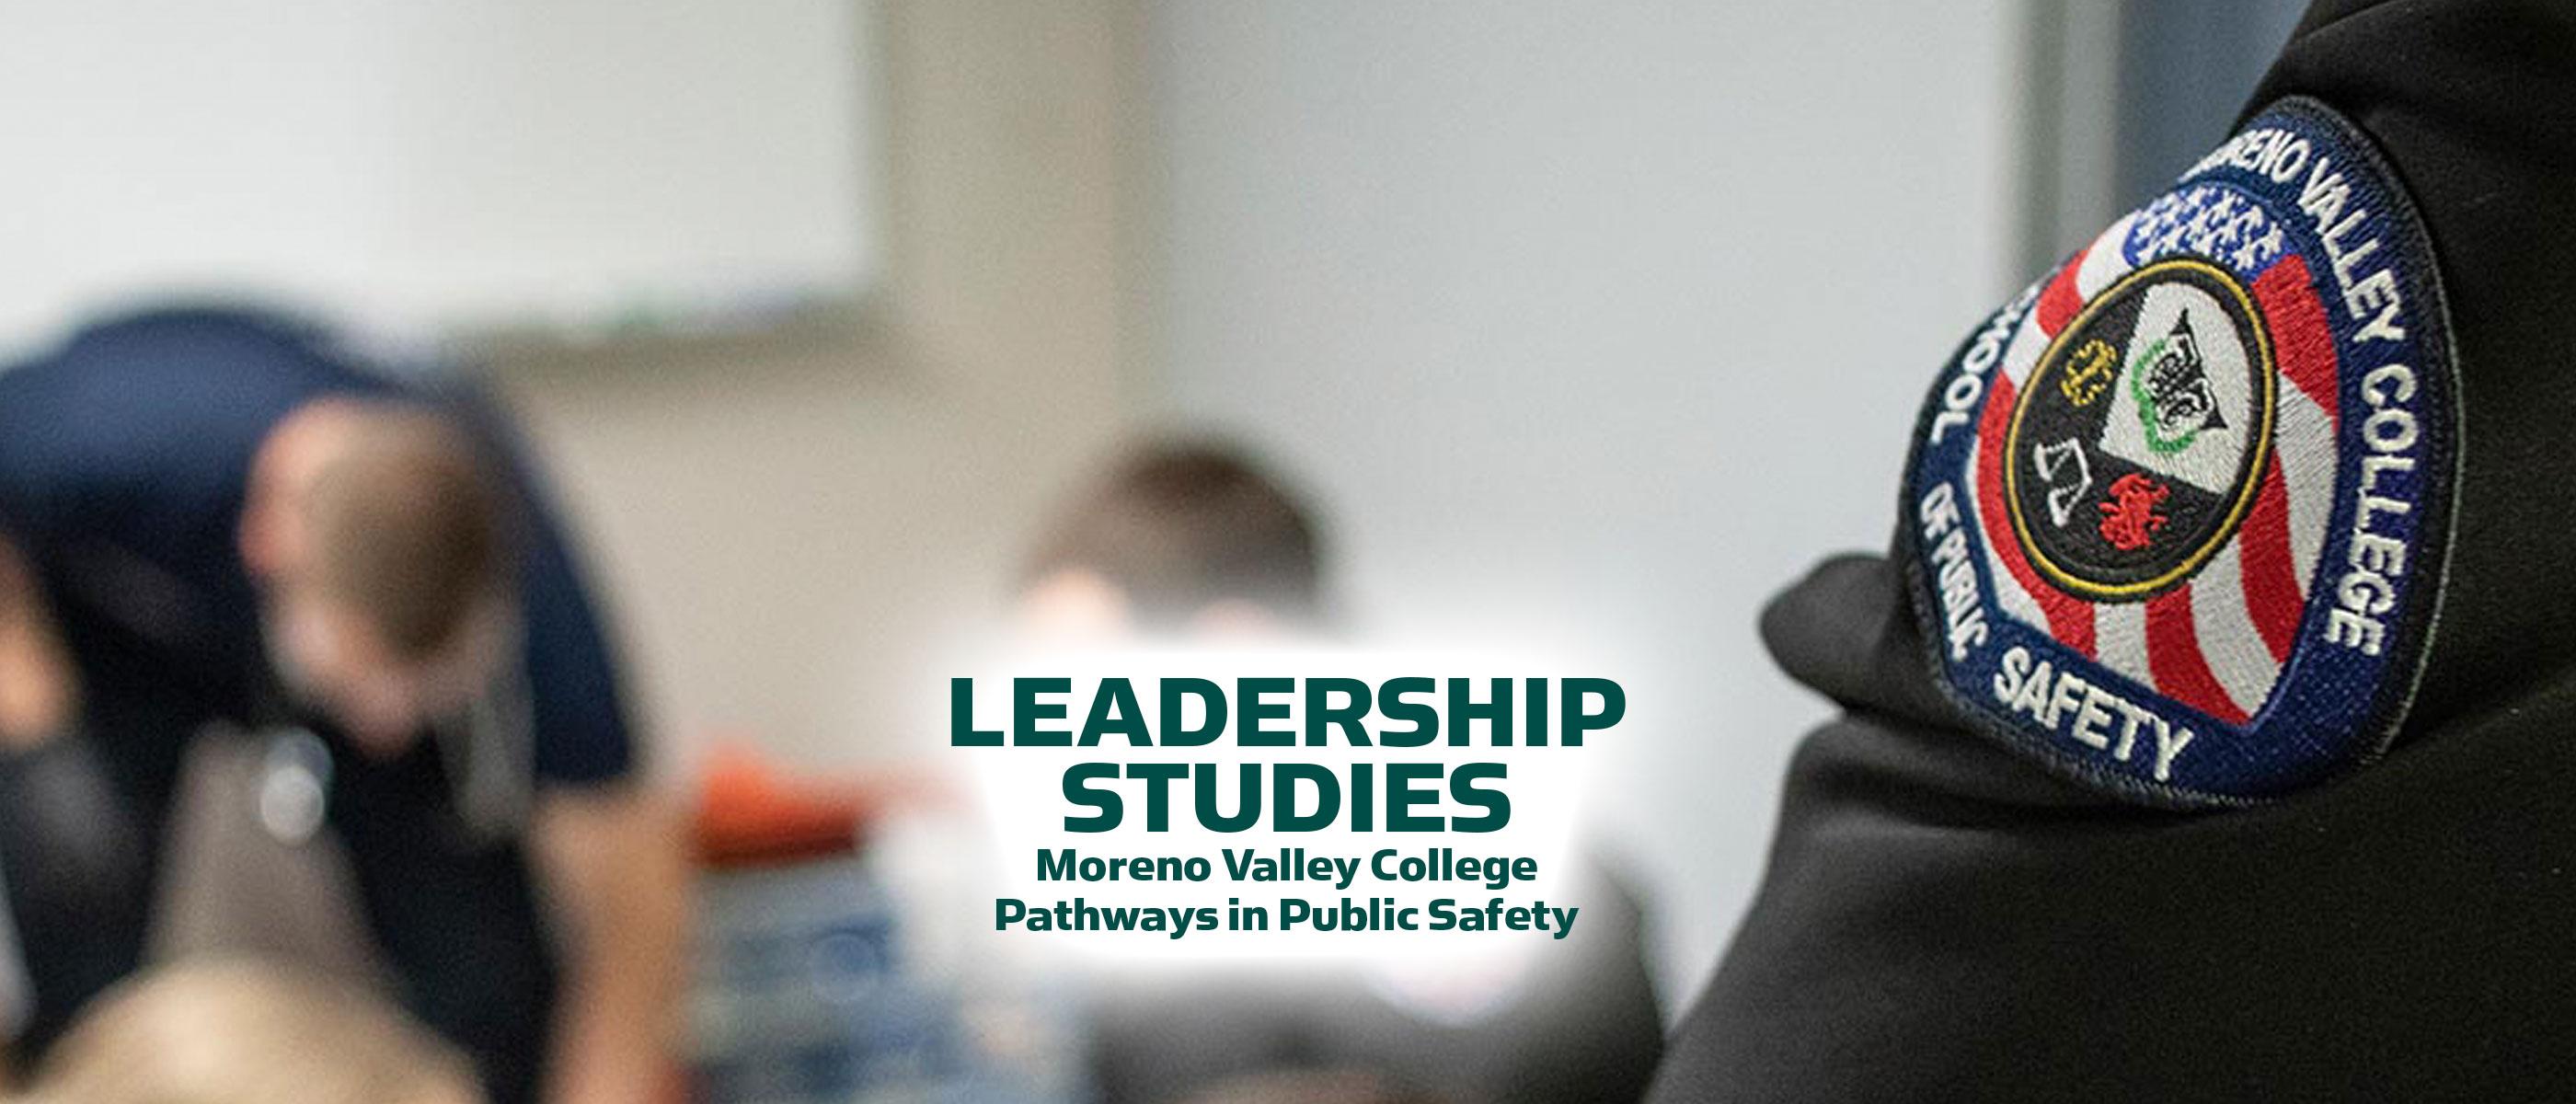 Leadership Studies - Moreno Valley College School of Public Safety Pathways